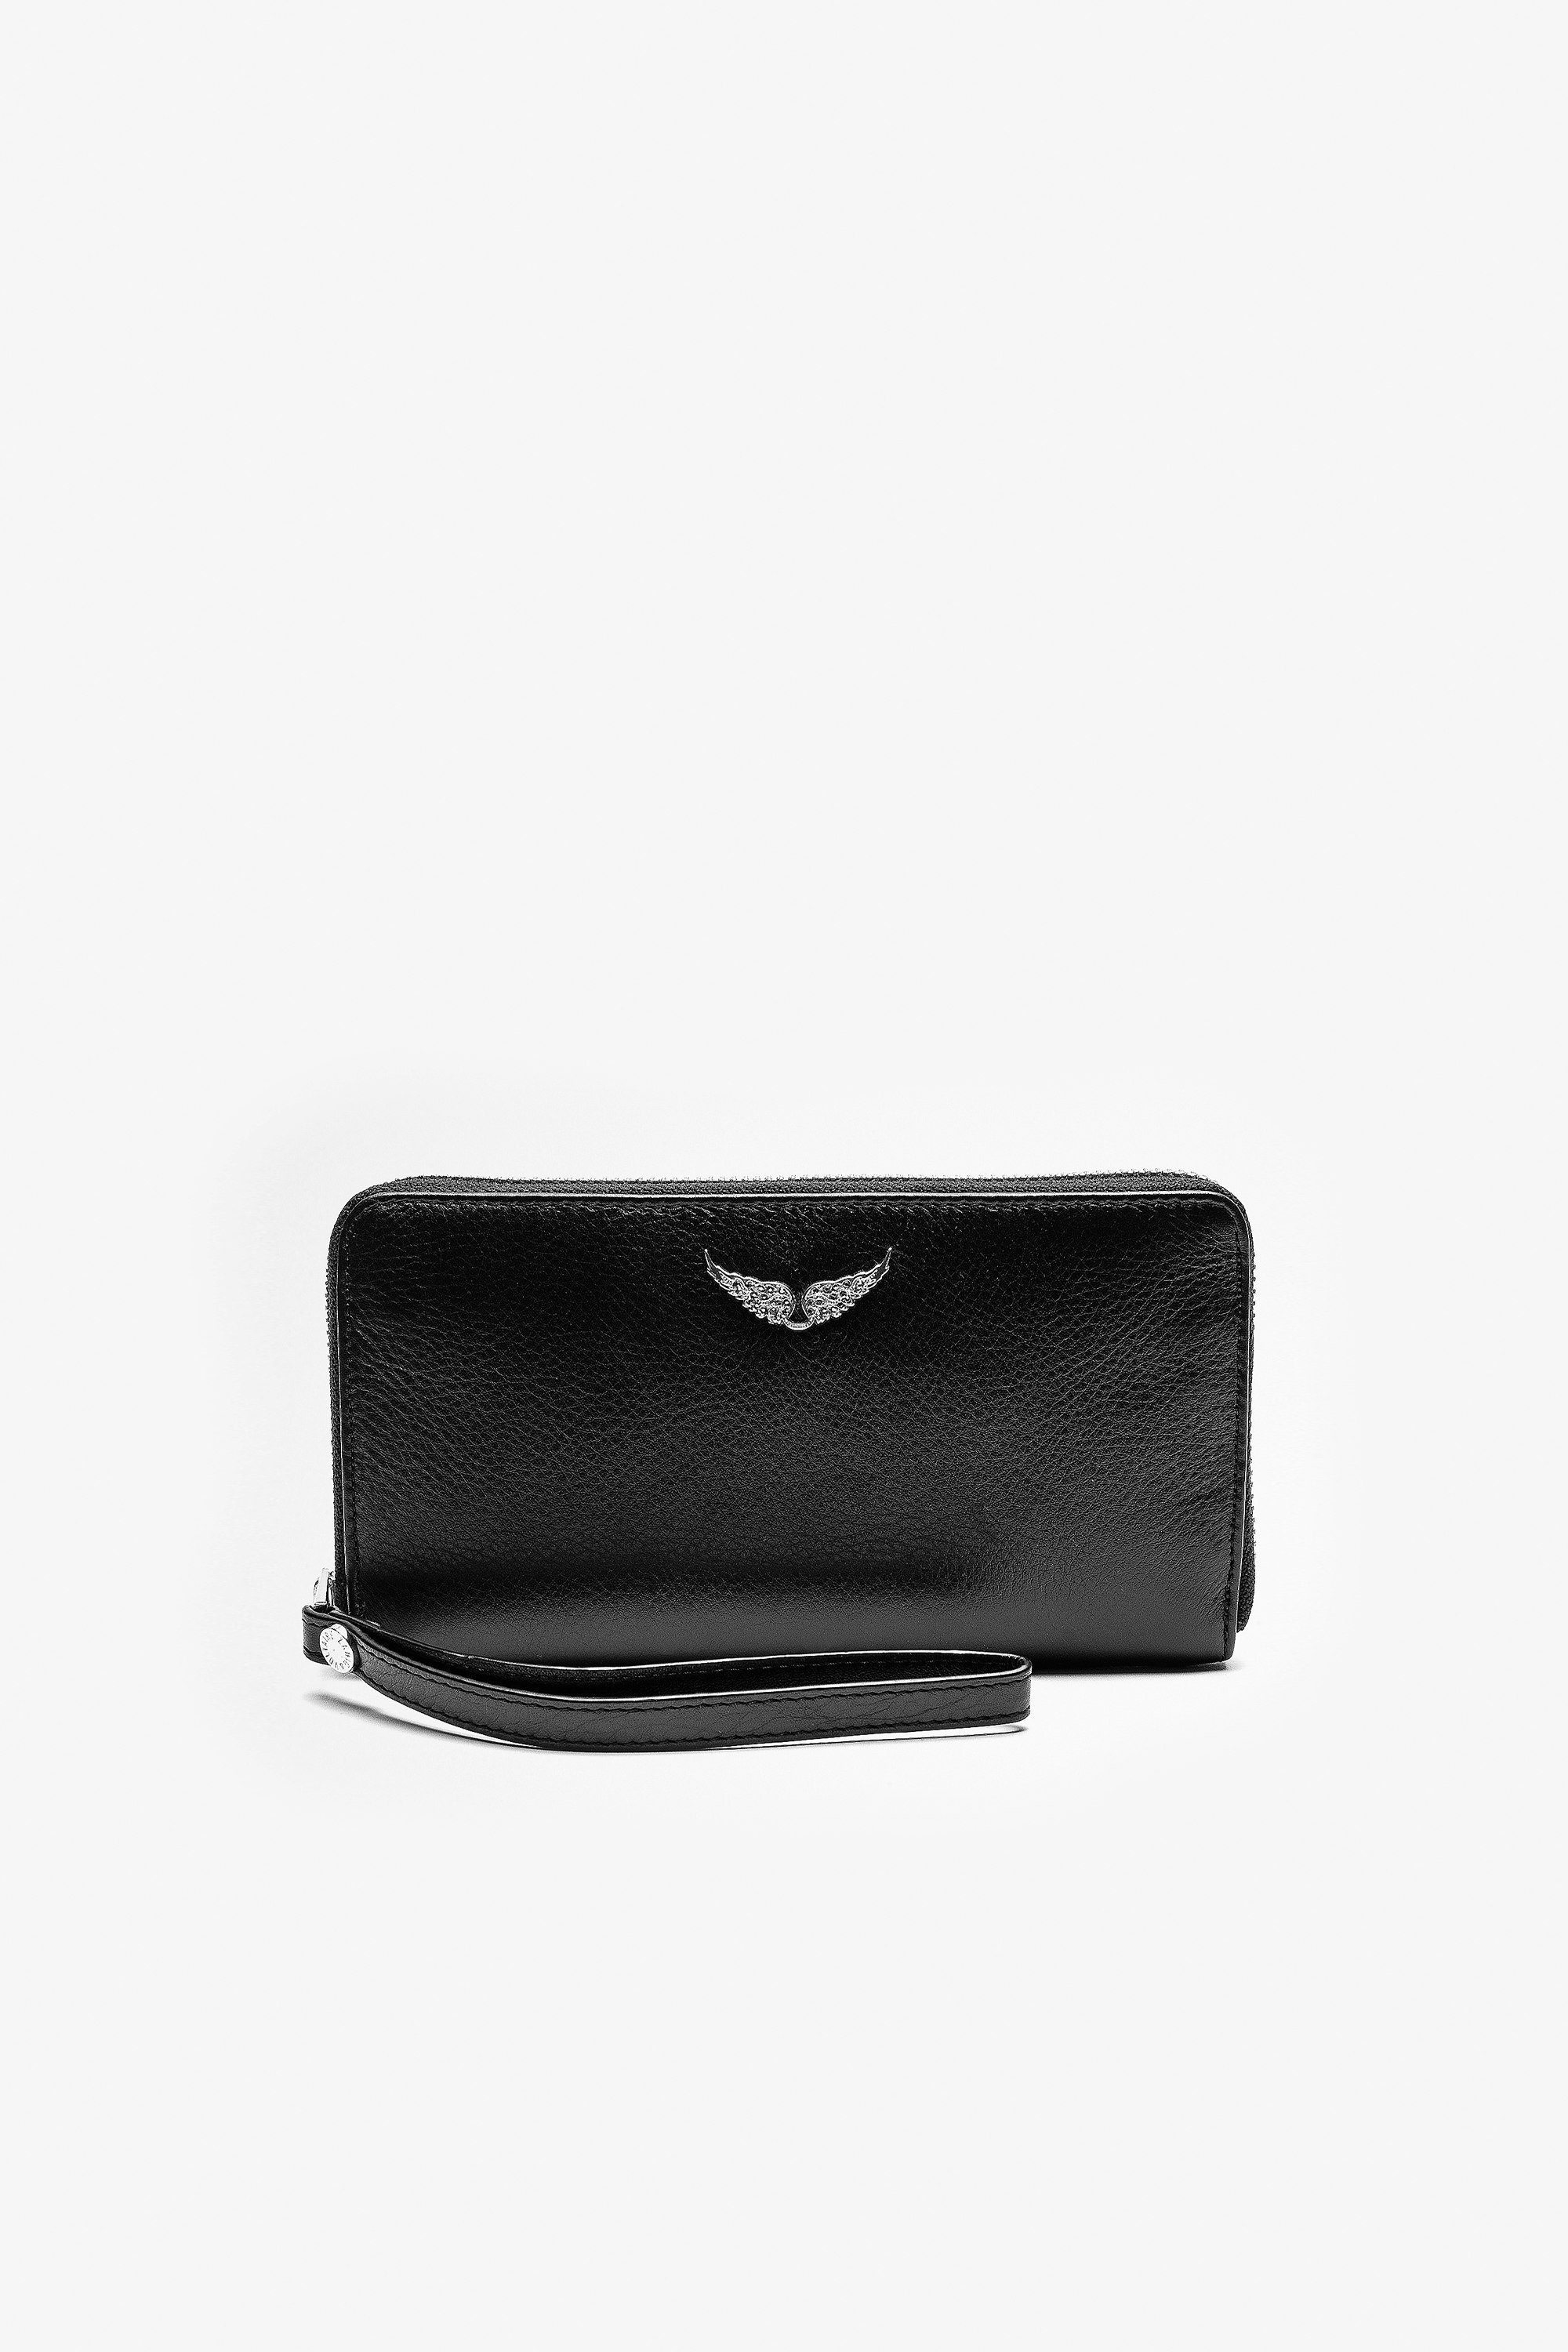 Compagnon Wallet Women’s black leather wallet.